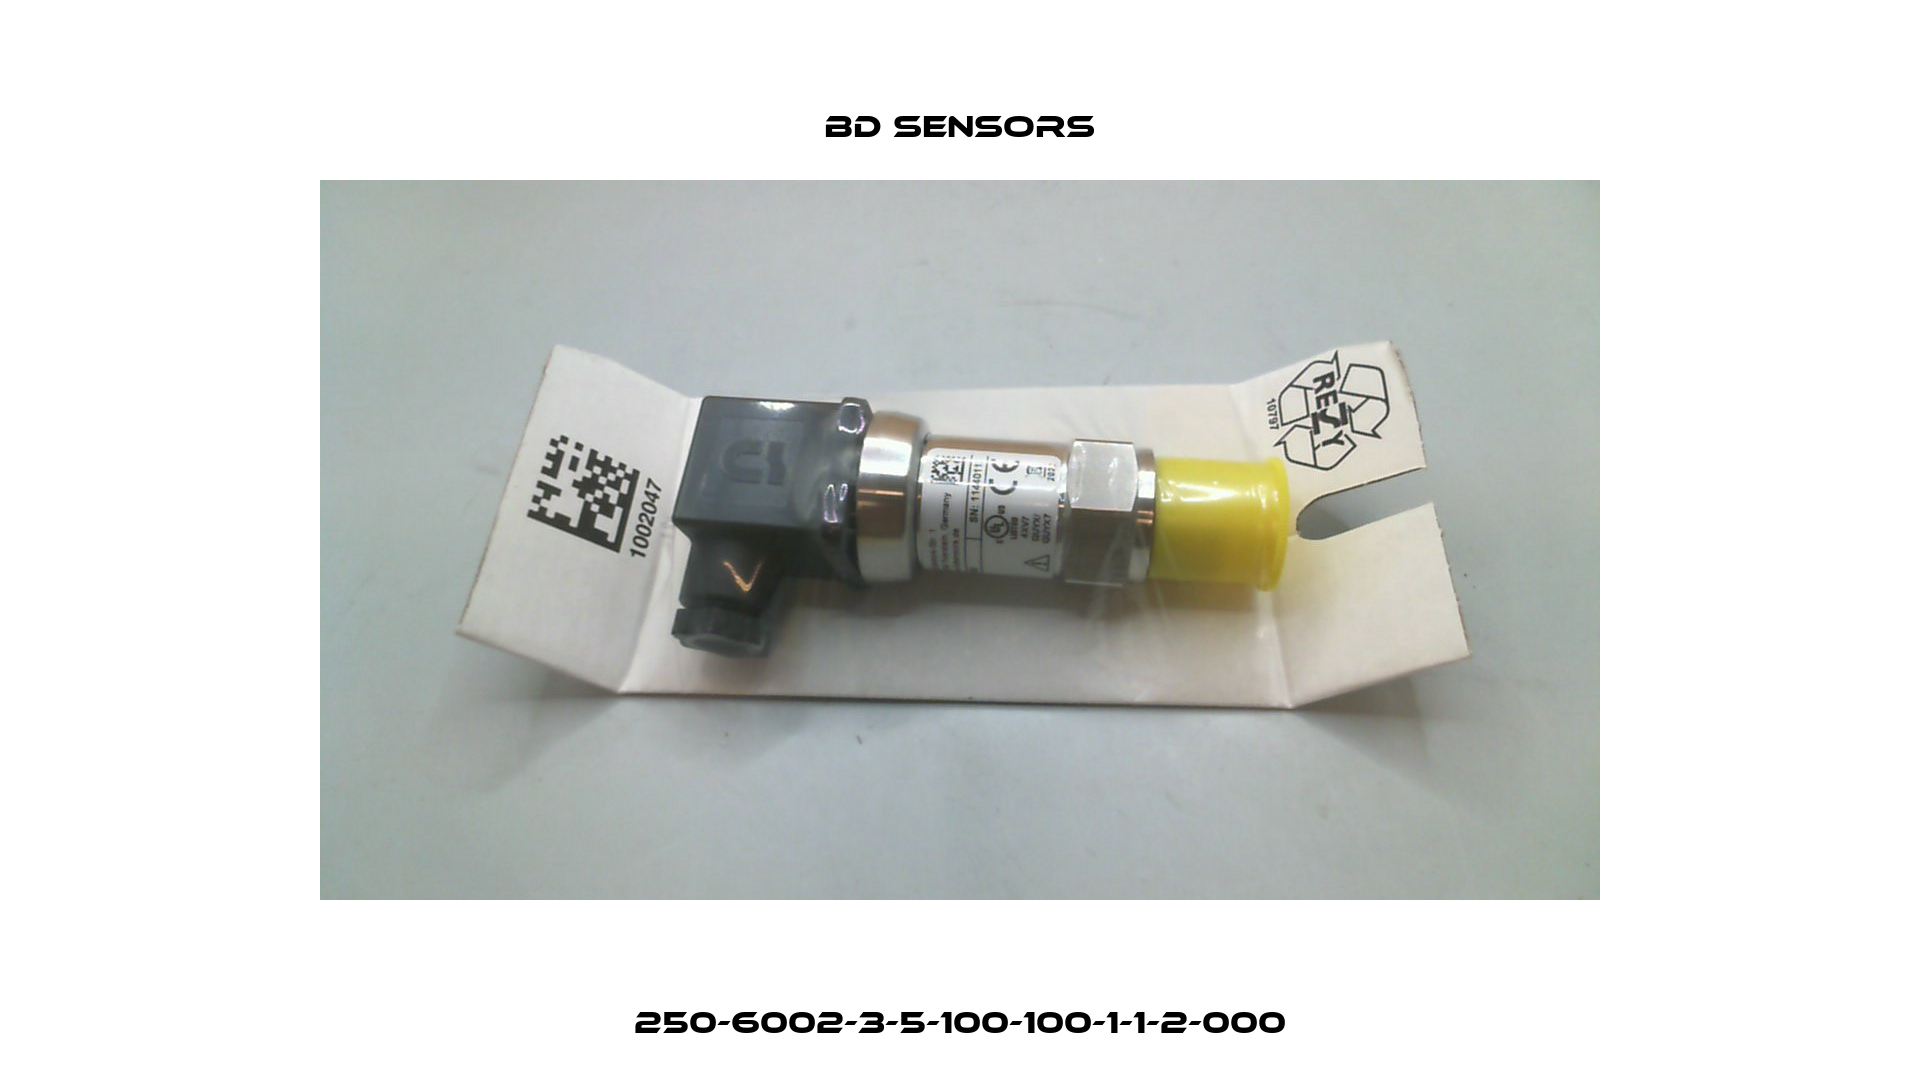 250-6002-3-5-100-100-1-1-2-000 Bd Sensors